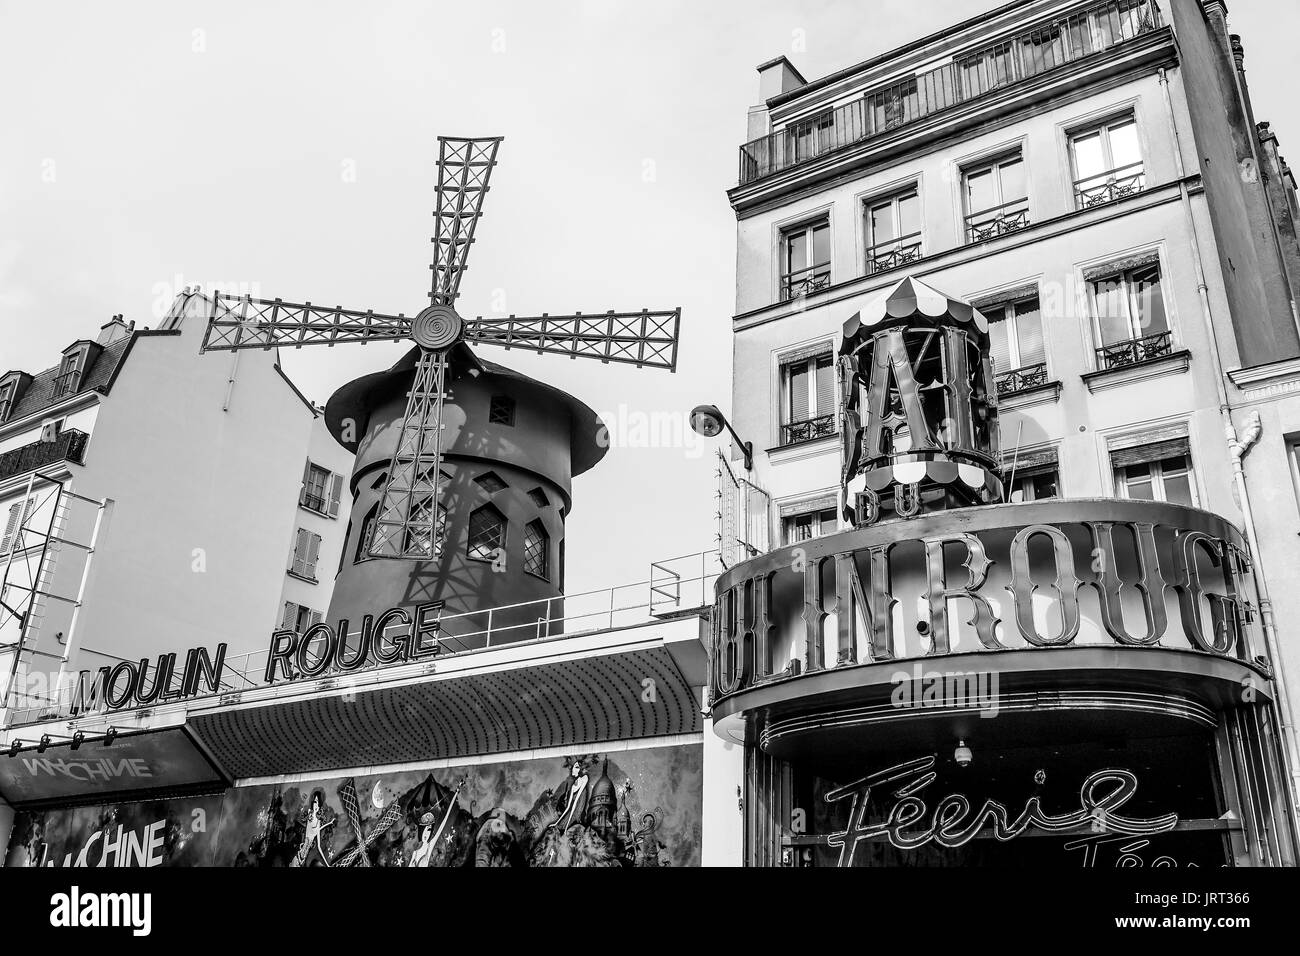 Das berühmte Moulin Rouge Cabaret Veranstaltungsort in Paris - Paris/Frankreich - 24. SEPTEMBER 2017 Stockfoto